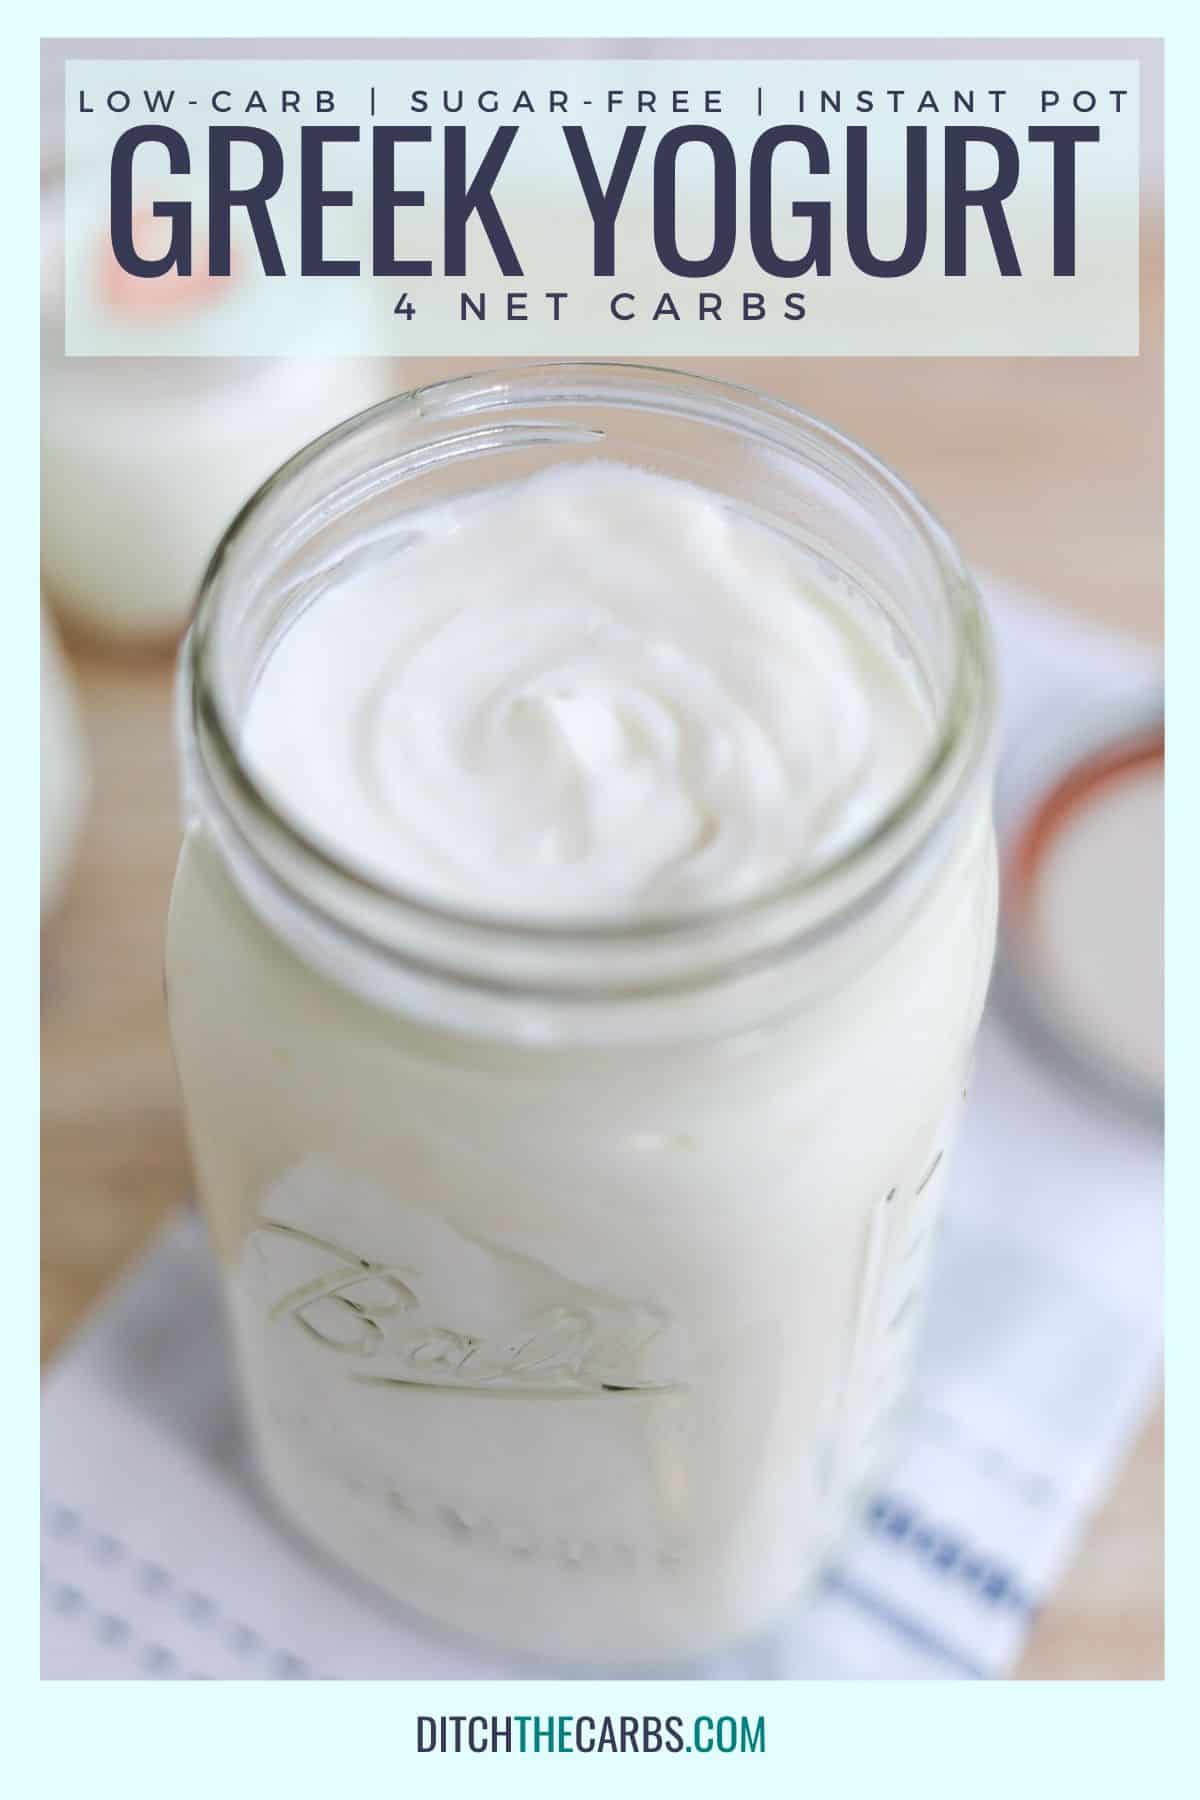 Low-carb Greek yogurt in a glass jar resting on a towel.